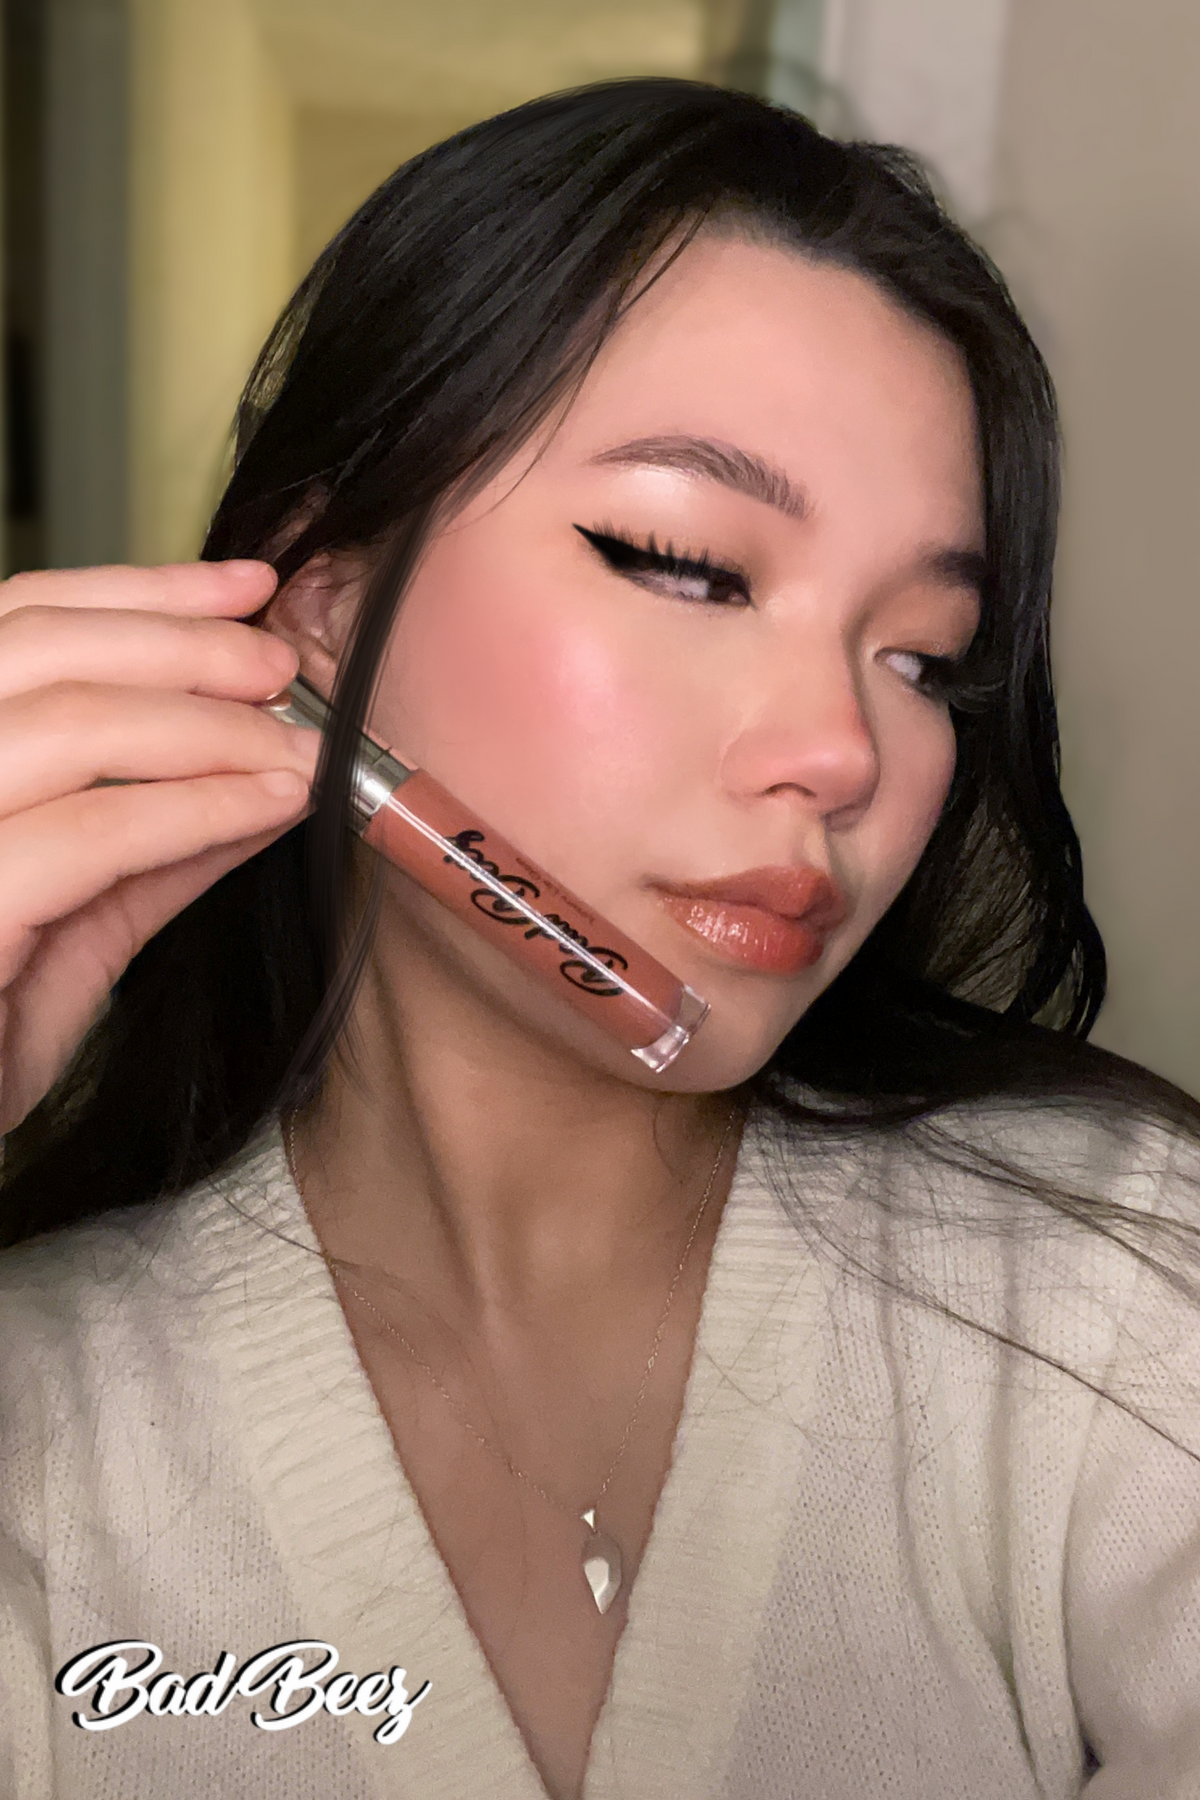 Hydrating & Moisturizing Luxury Lip Gloss | Bare .24oz